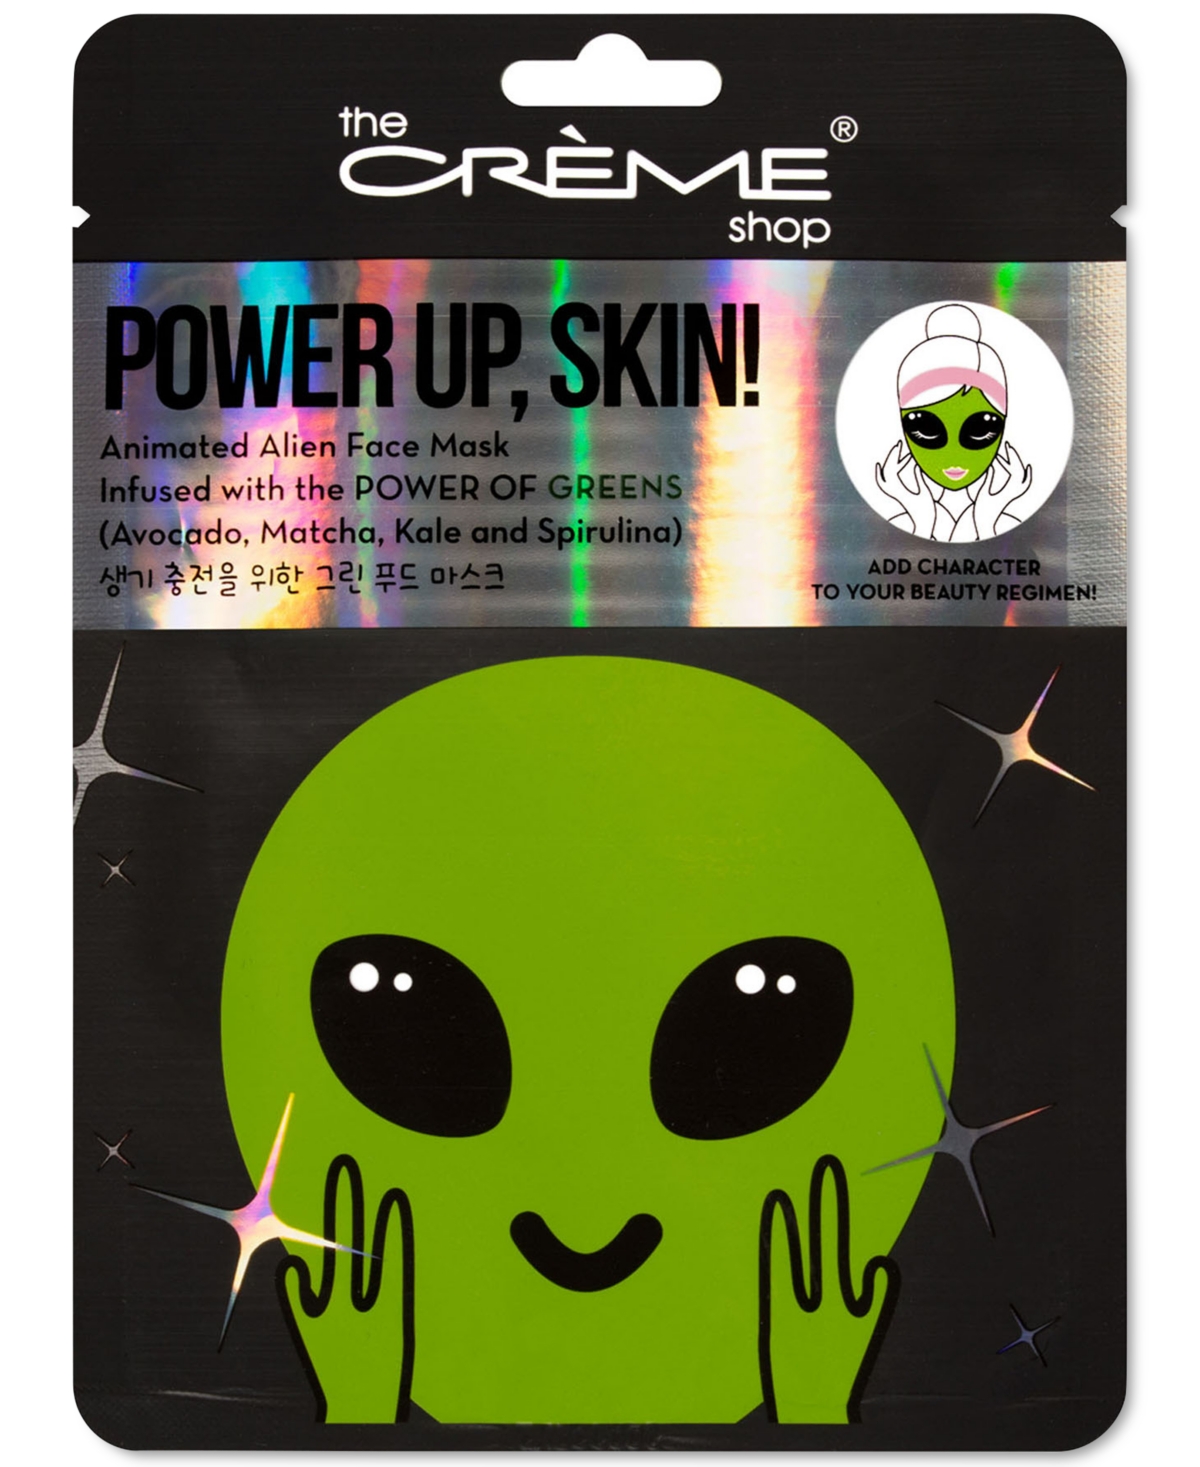 Power Up, Skin! Animated Alien Face Mask